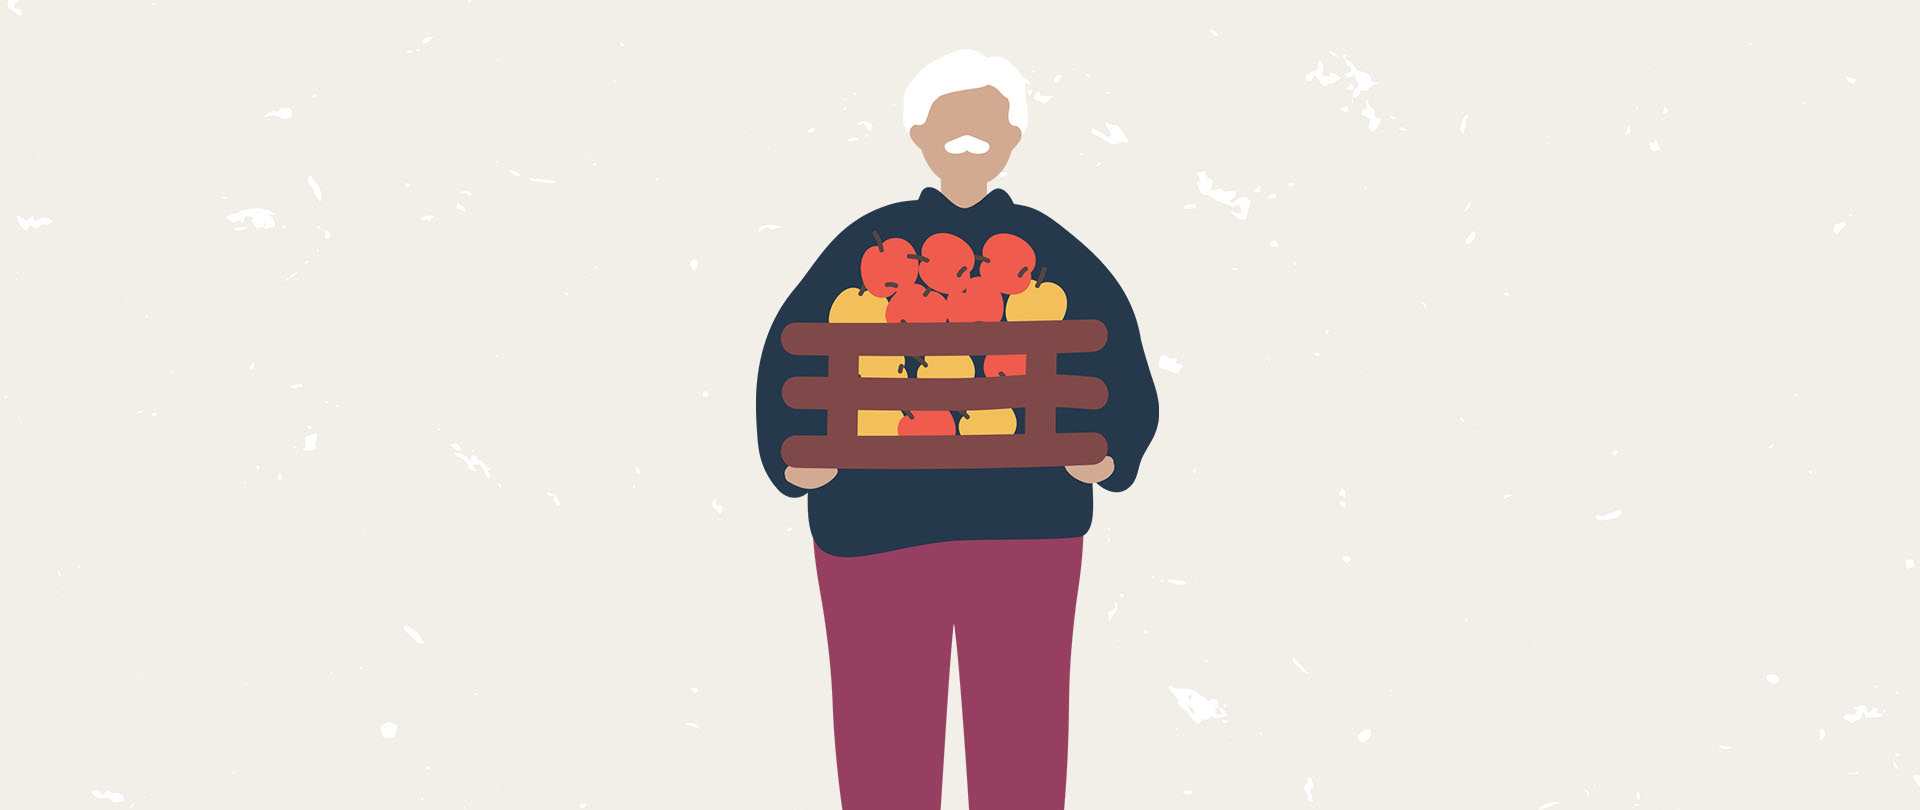 Man carrying vegetables illustration